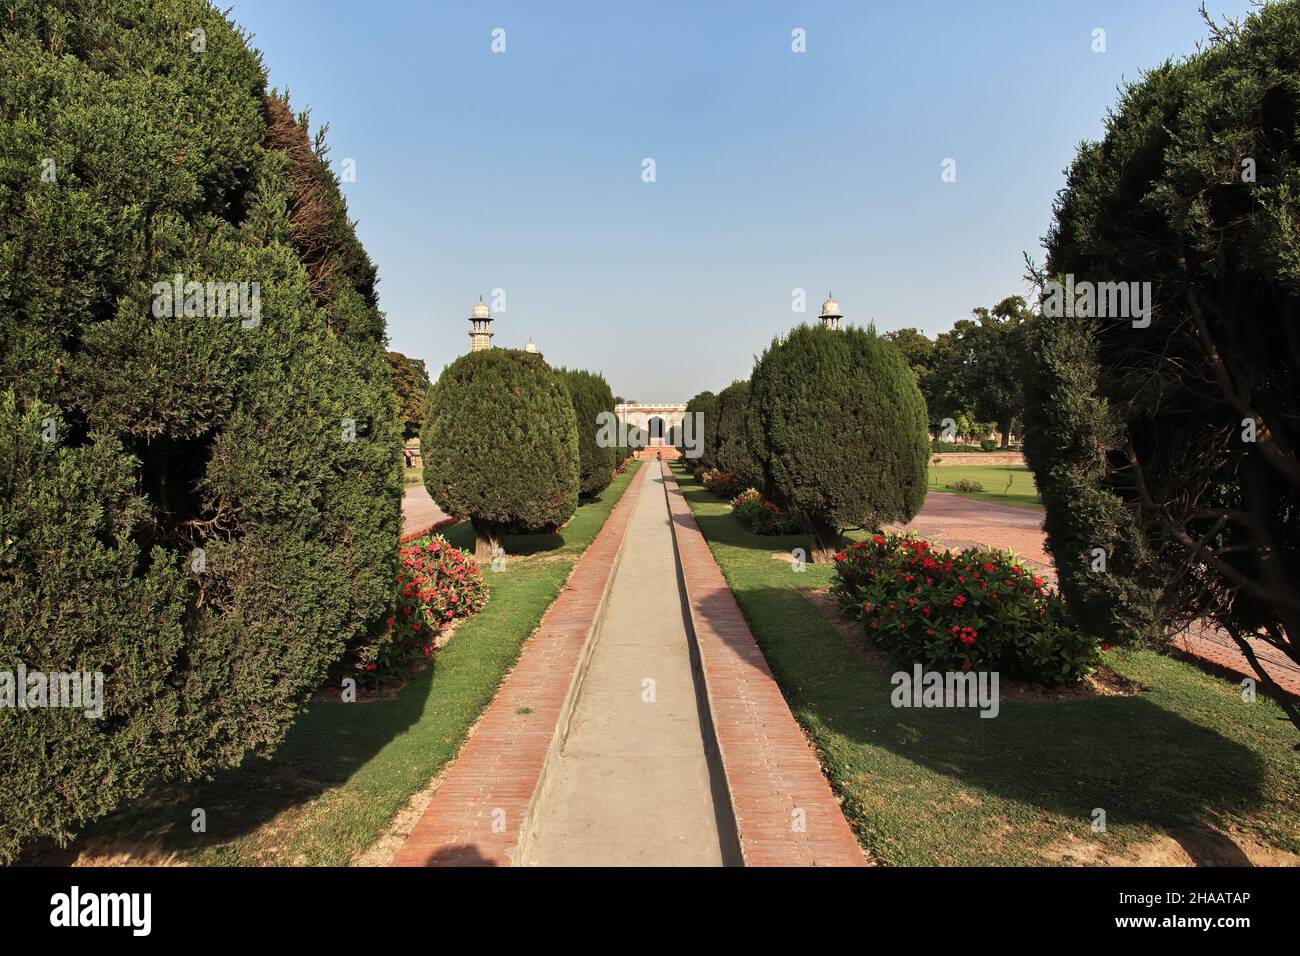 The park of Tomb of Jahangir close Lahore, Punjab province, Pakistan Stock Photo